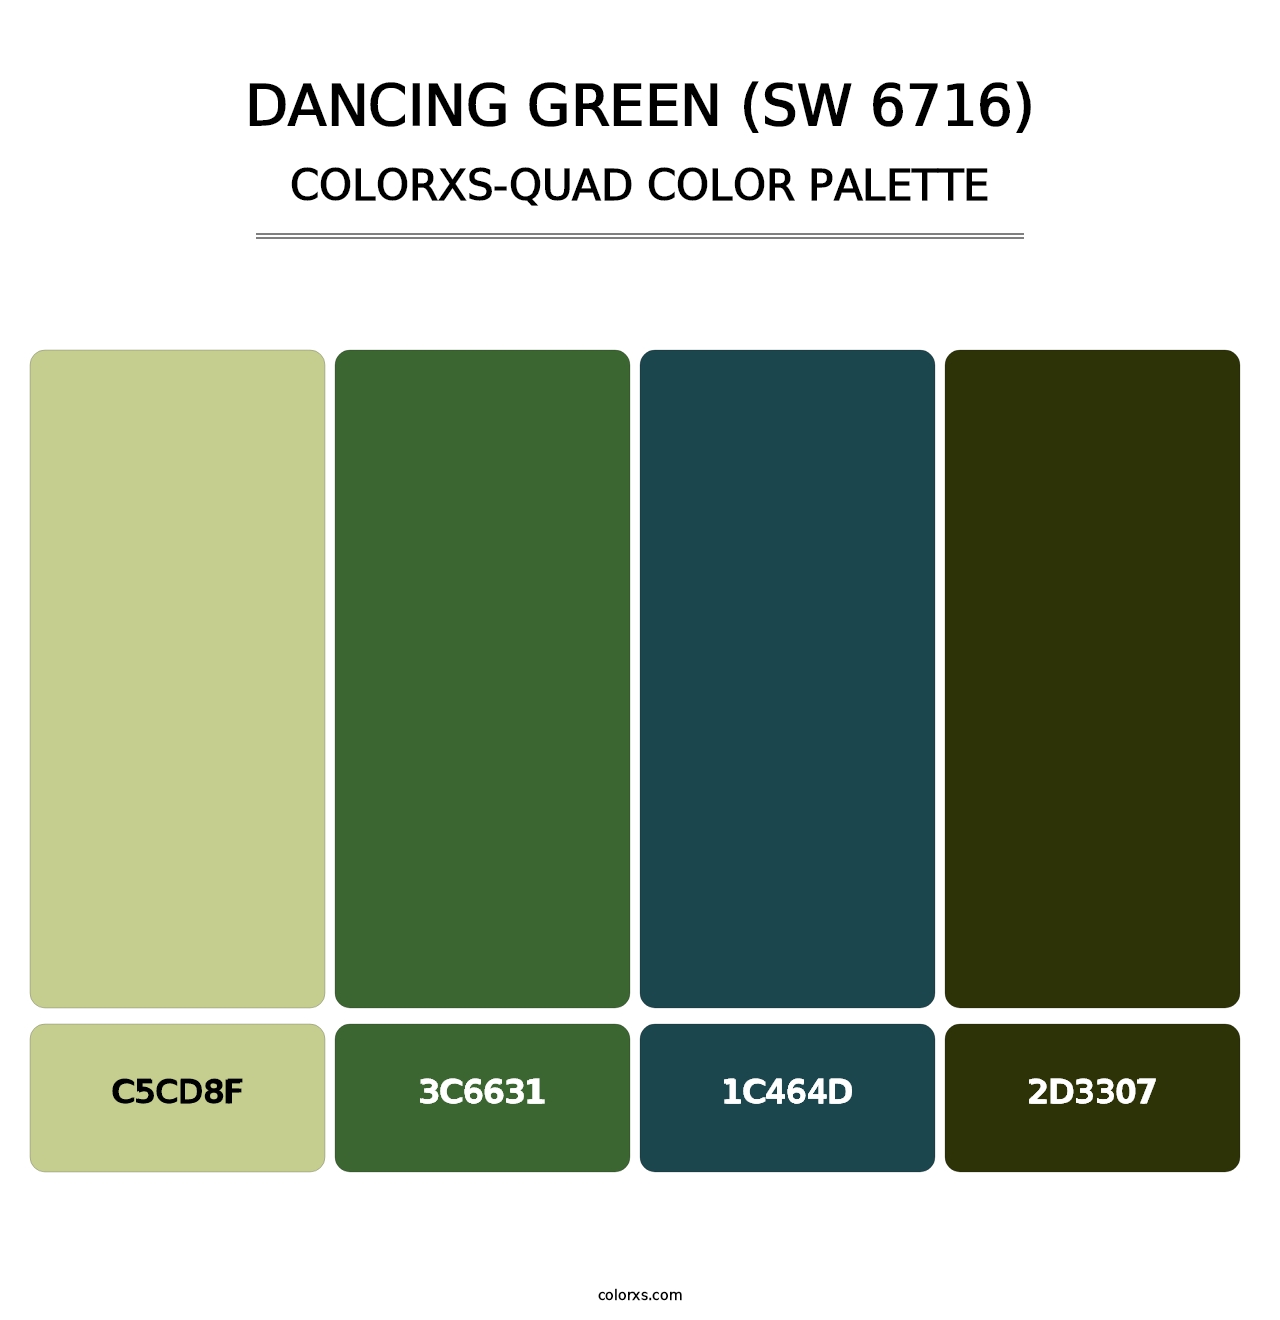 Dancing Green (SW 6716) - Colorxs Quad Palette